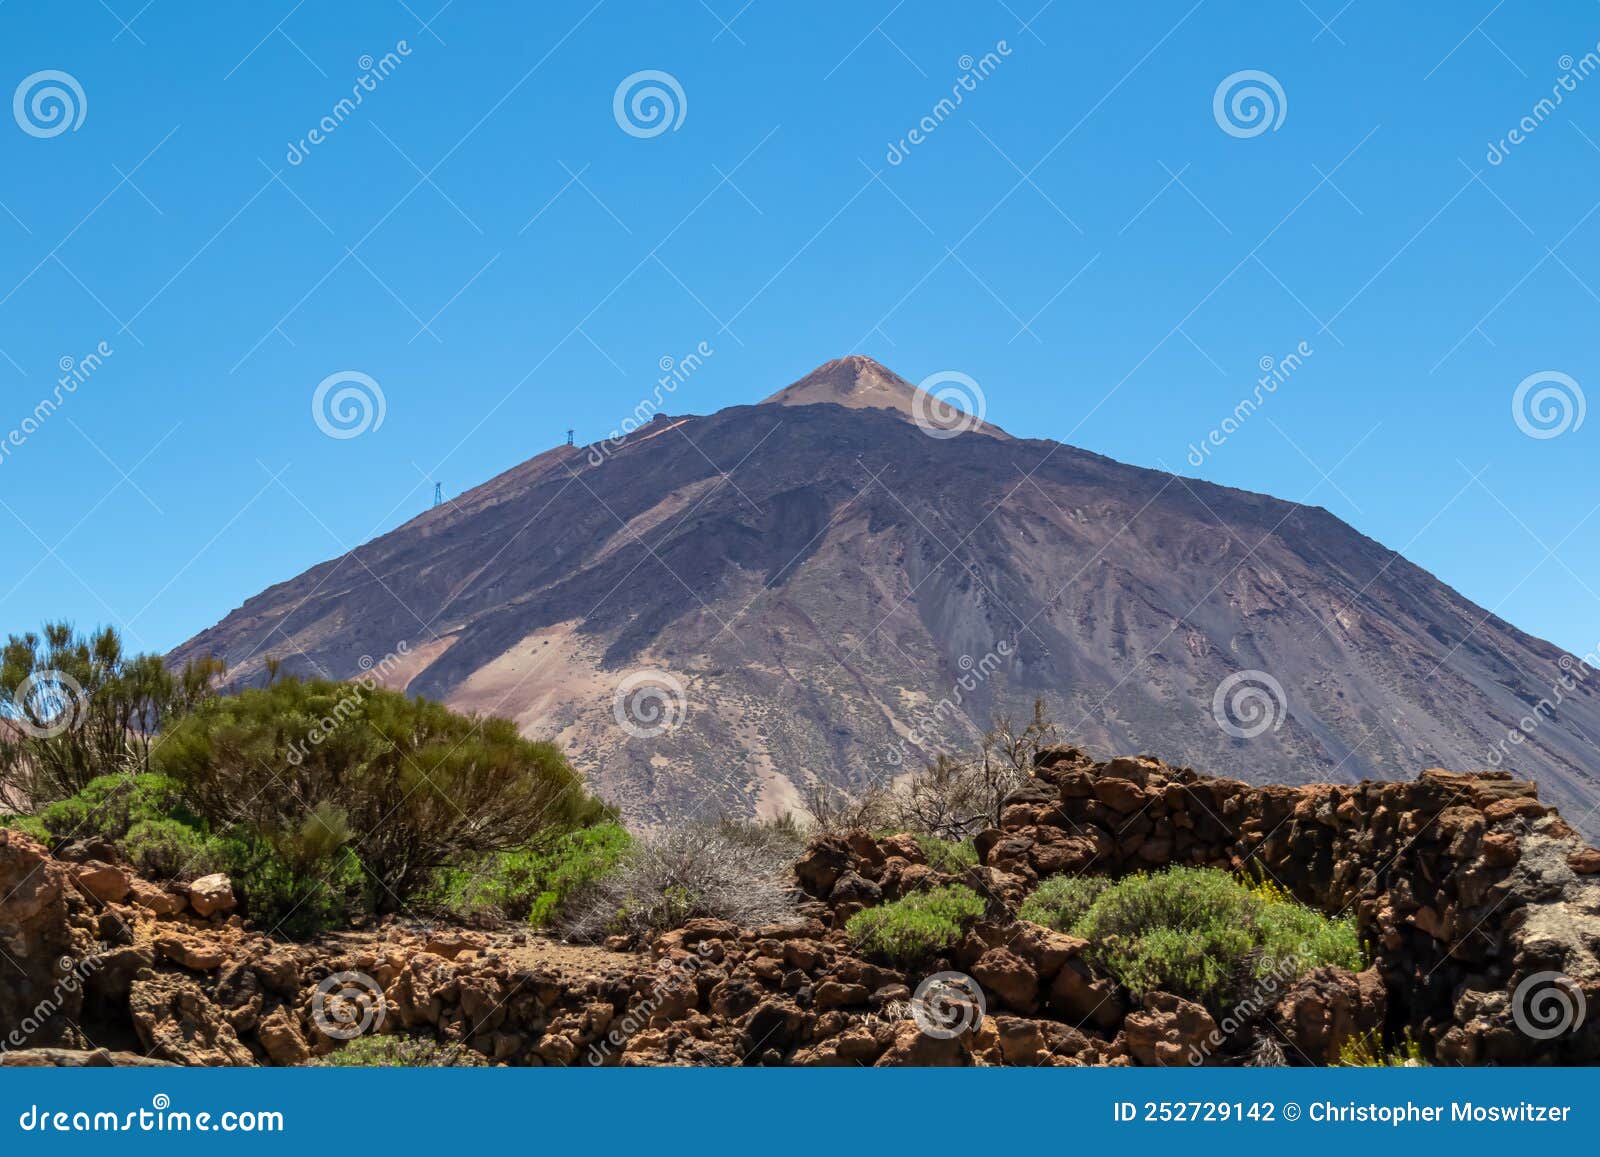 teide - panoramic view on volcano pico del teide and montana blanca, mount el teide national park, tenerife, canary islands,